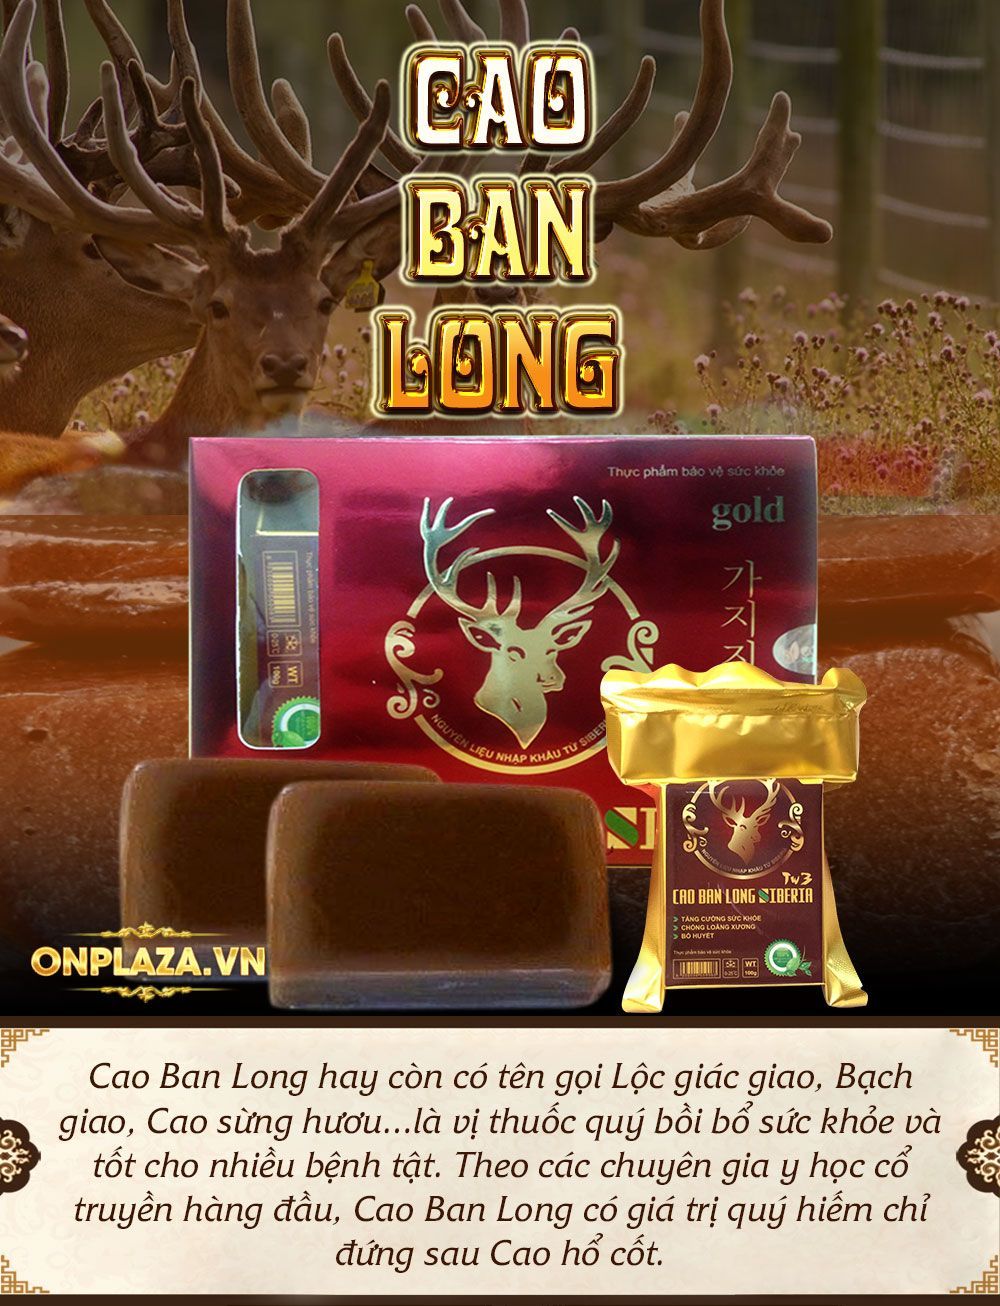 Cao ban long